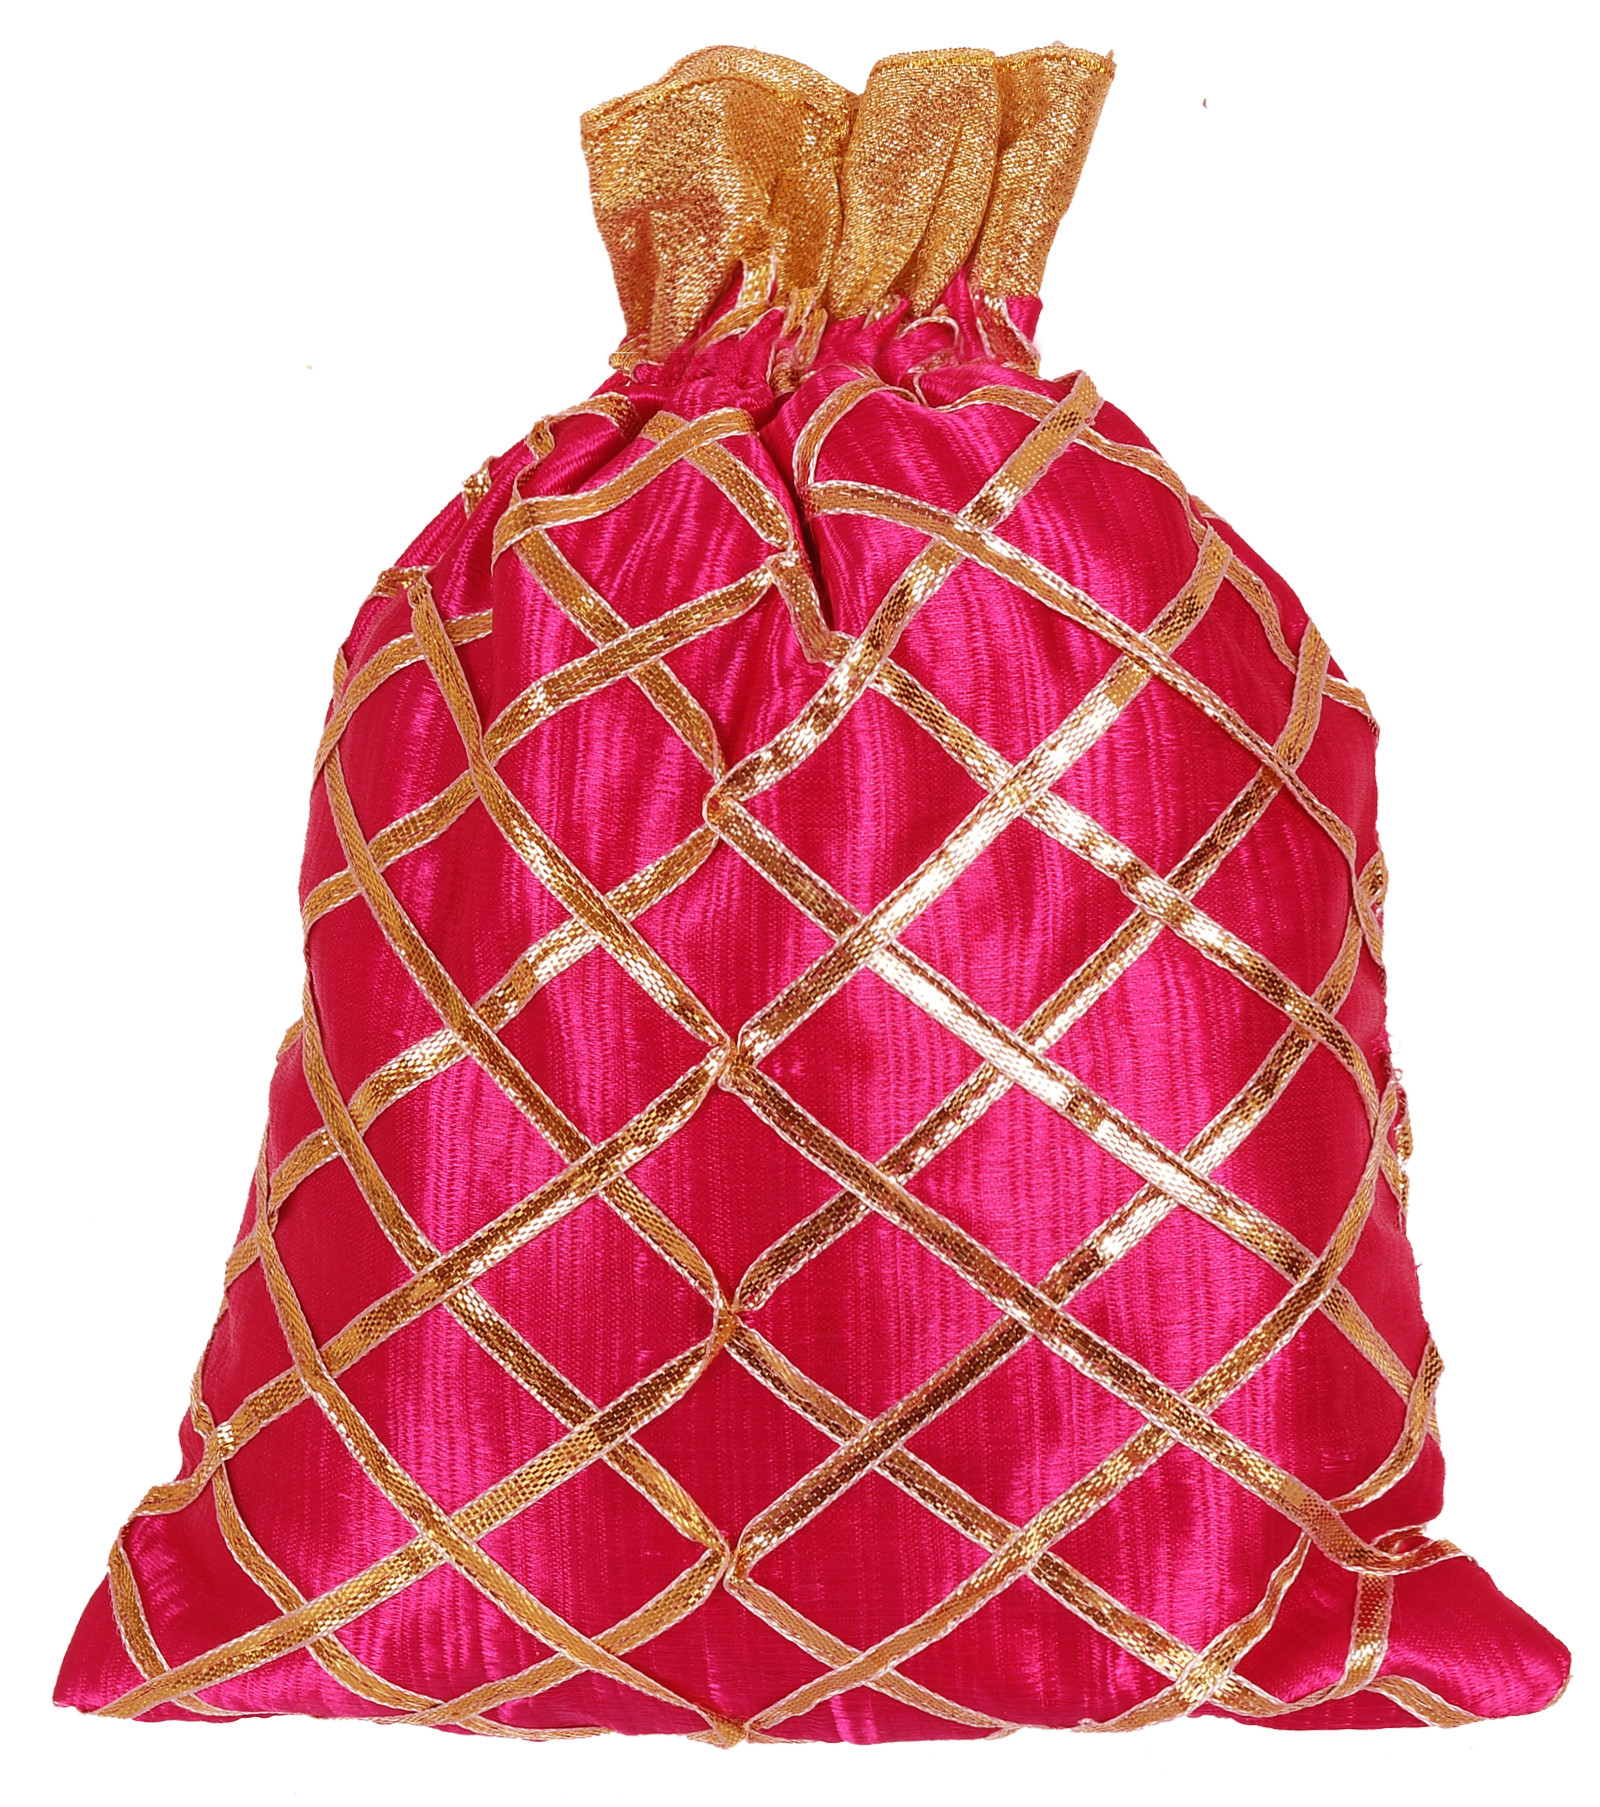 Kuber Industries Drawstring Potli Bag Party Wedding Favor Gift Jewelry Bags-(Pink)